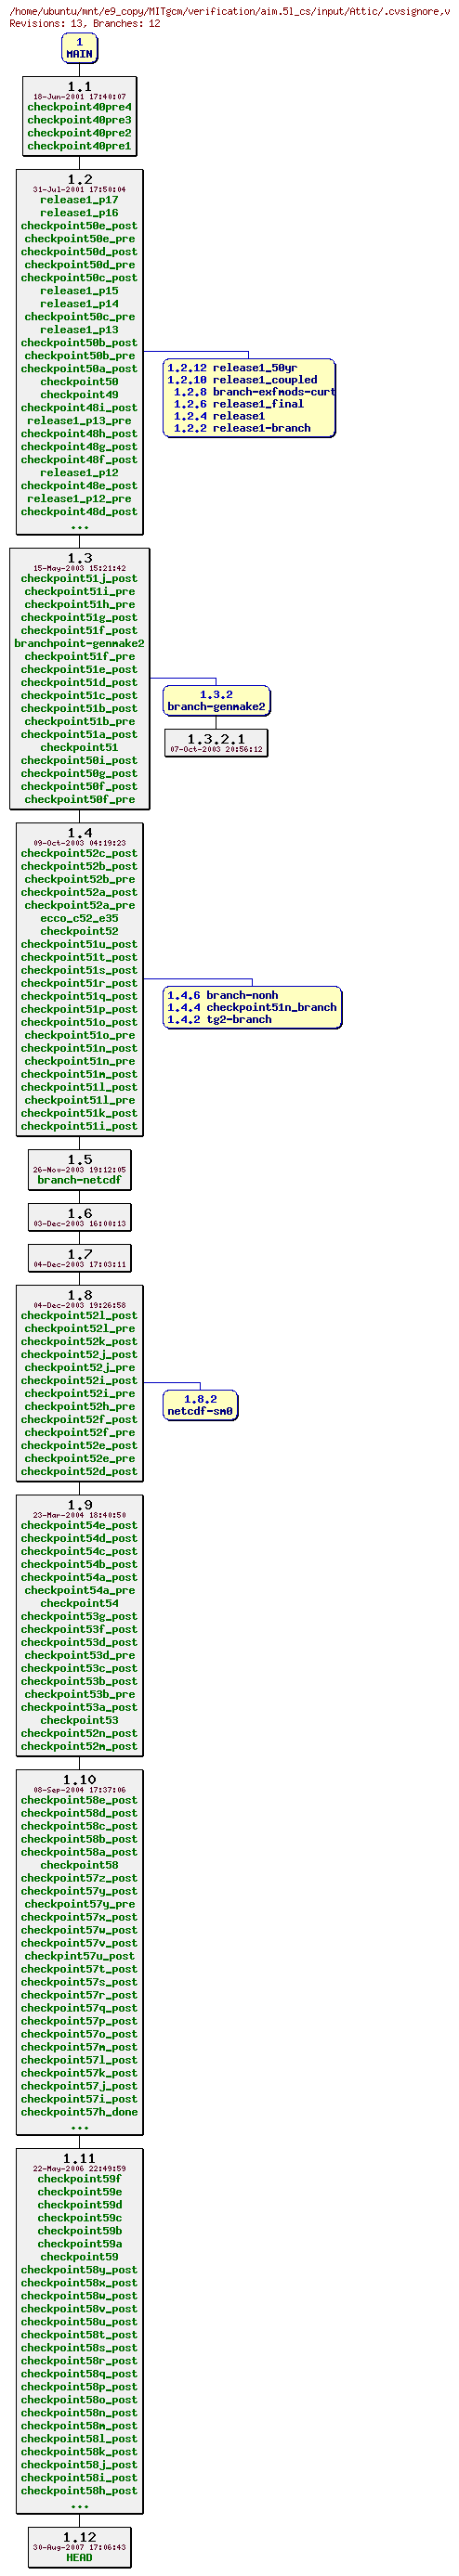 Revisions of MITgcm/verification/aim.5l_cs/input/.cvsignore